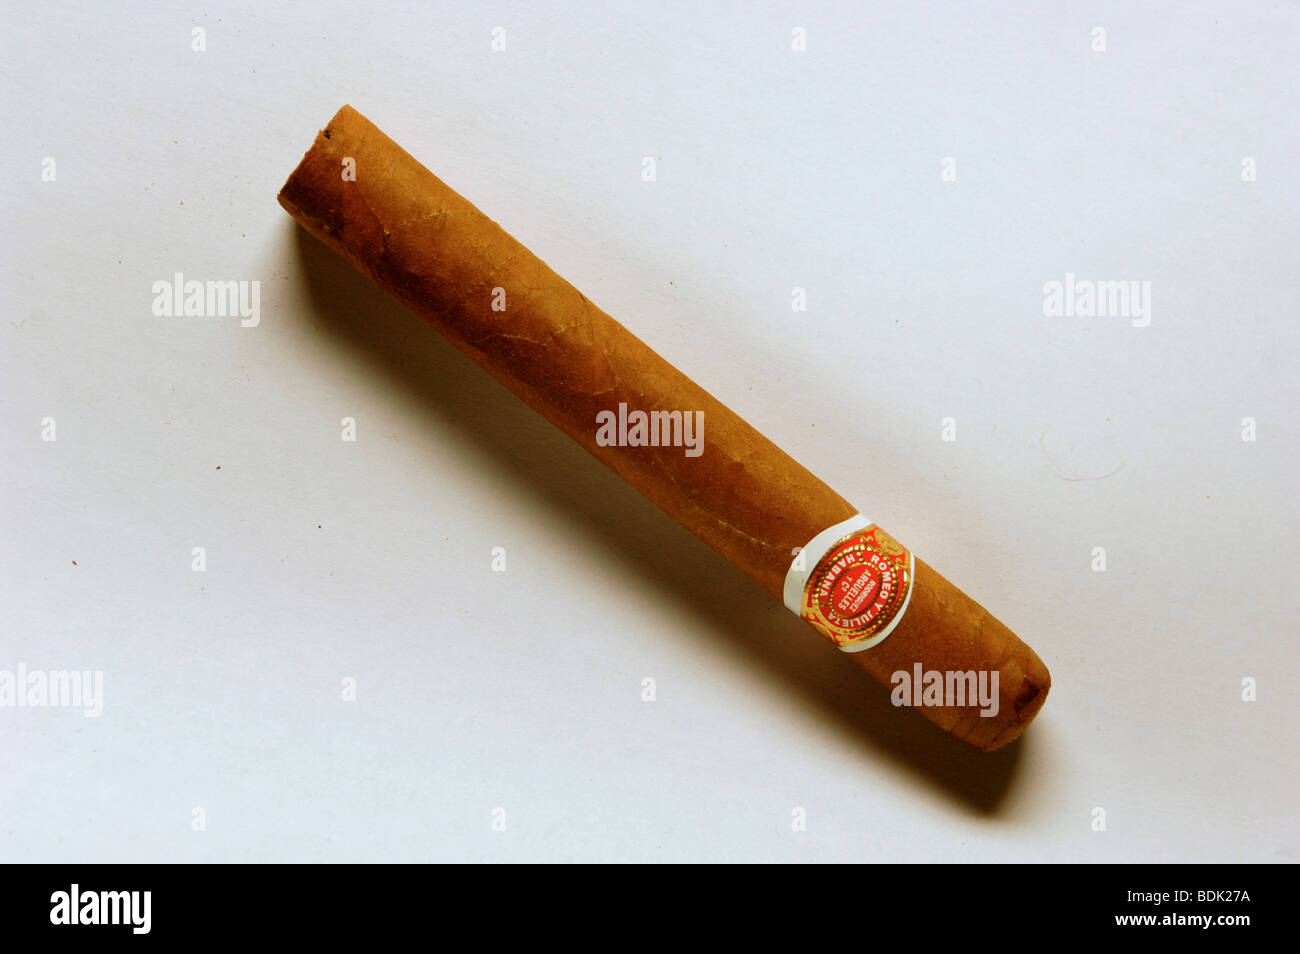 Romeo Y Julieta Havana cigar. Stock Photo